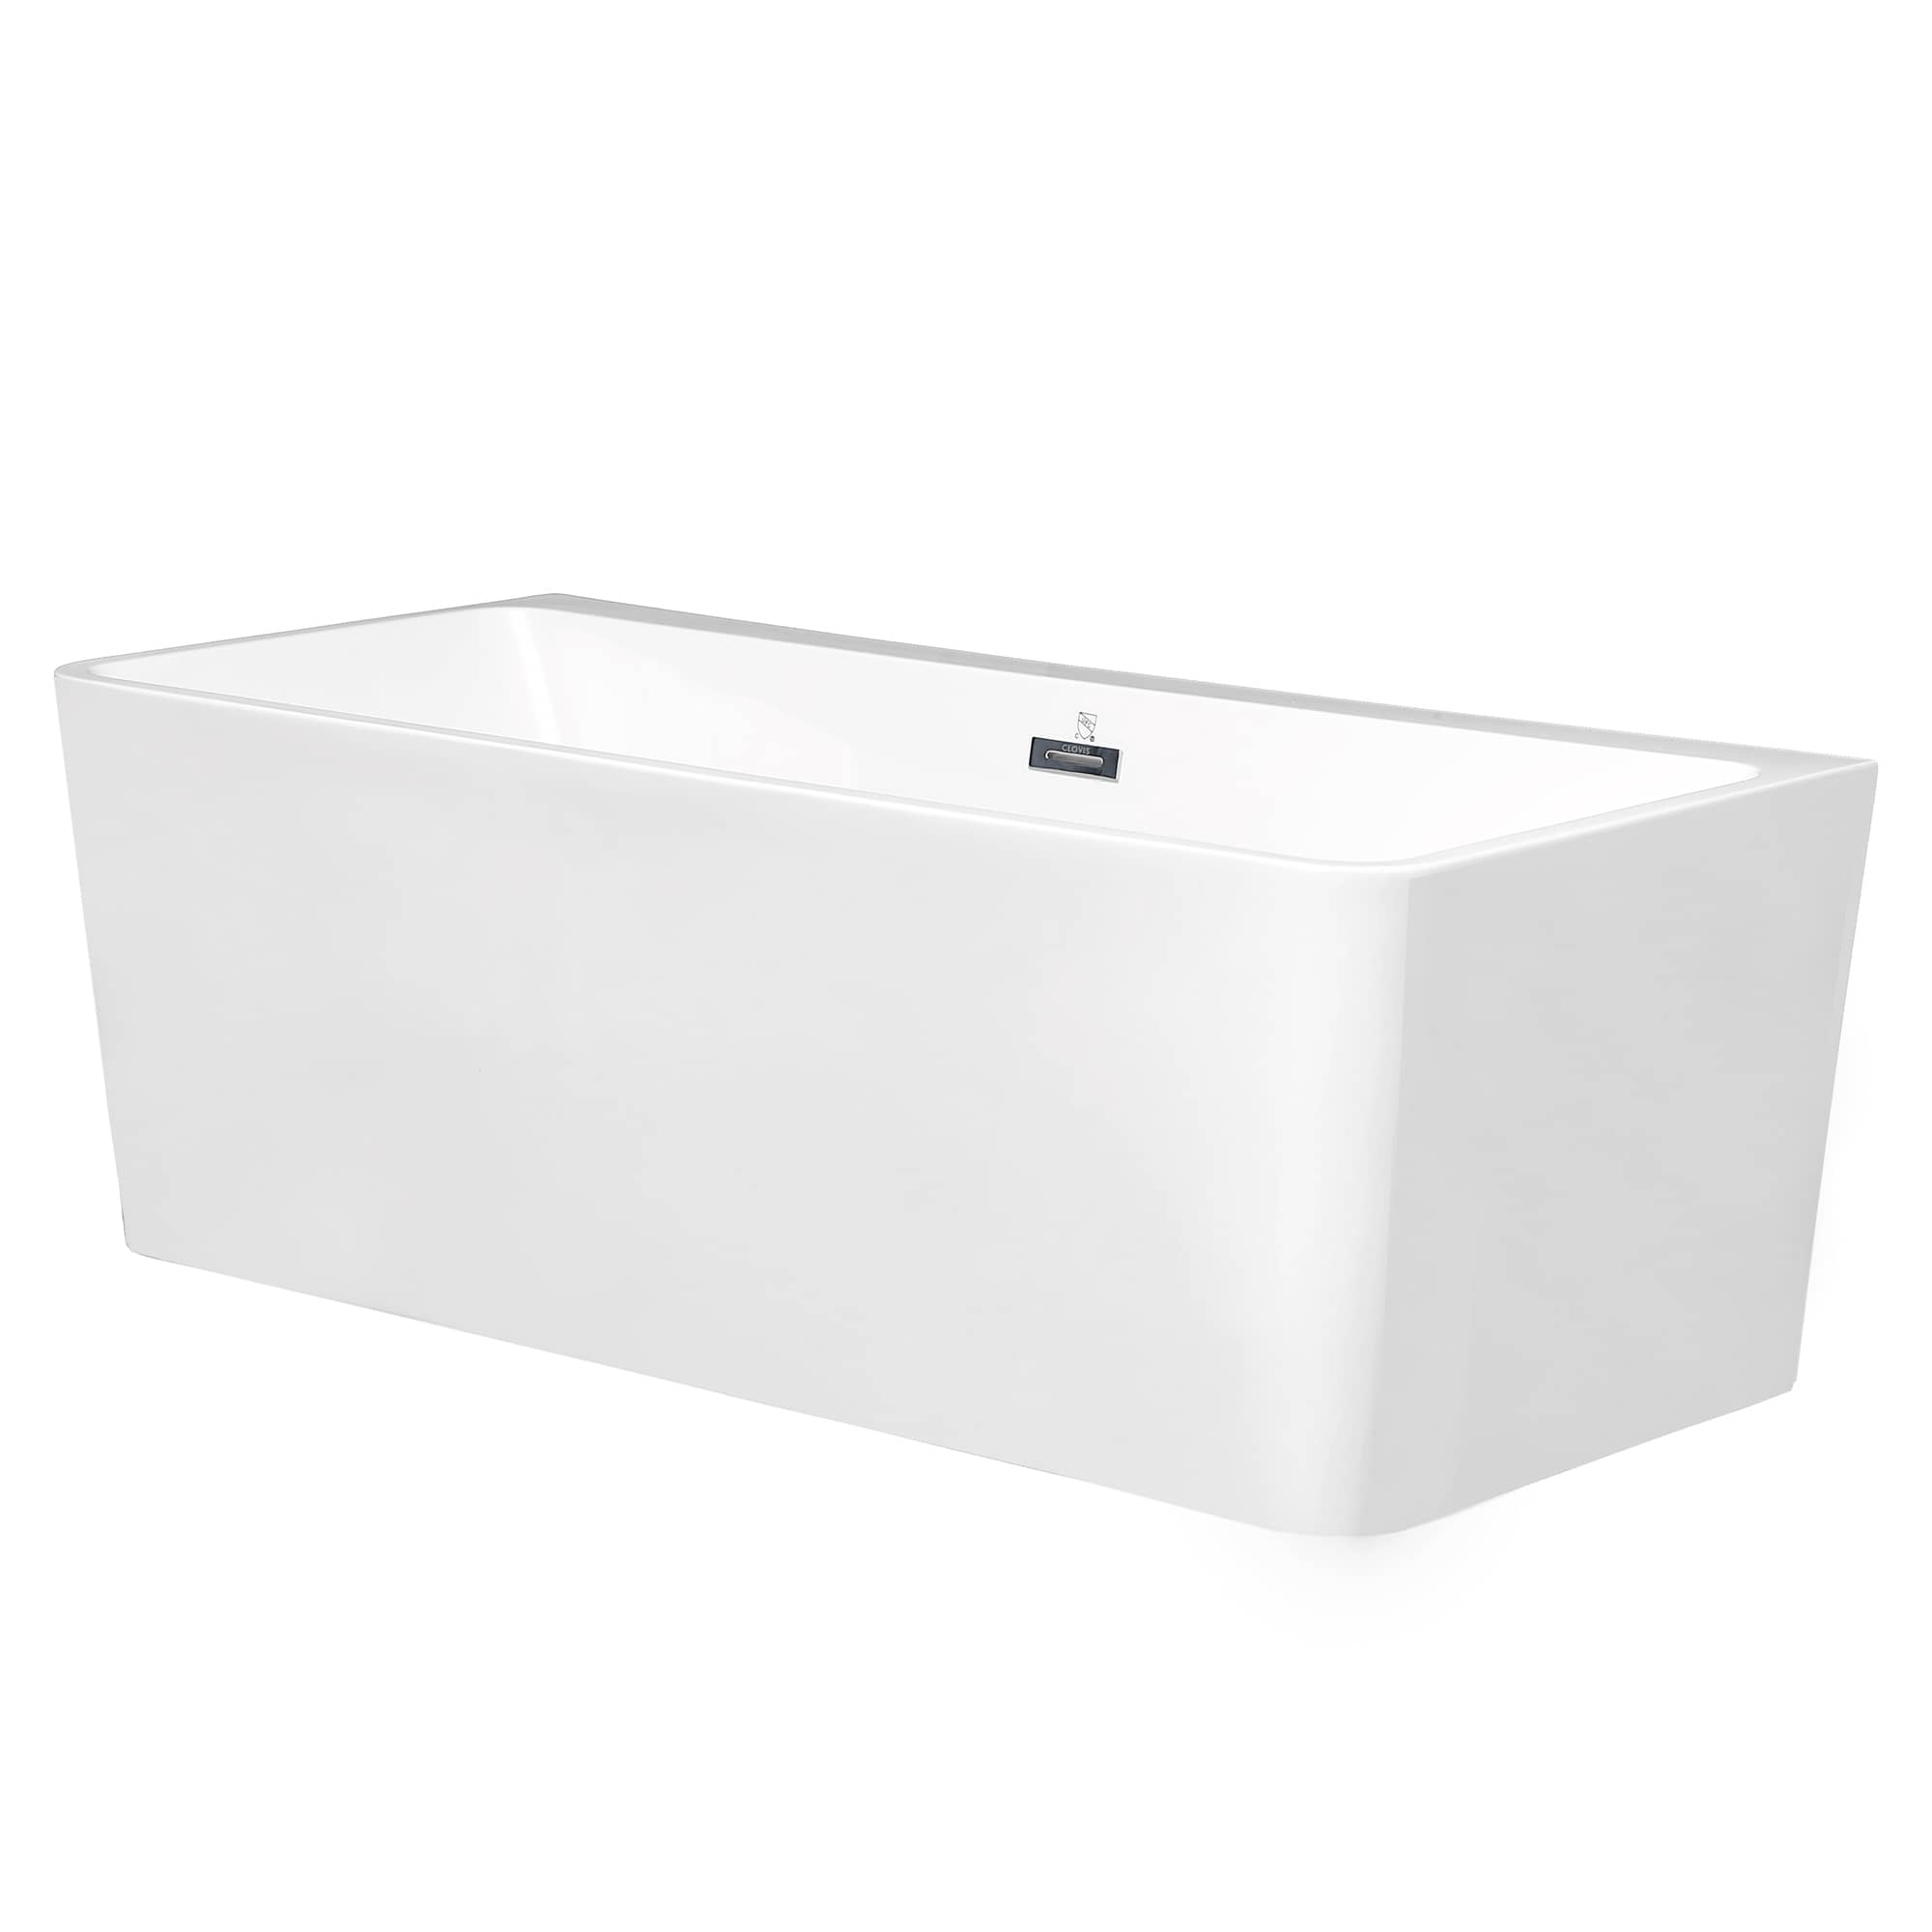 CASAINC 64 Inch Acrylic Alcove Freestanding Soaking Bathtub